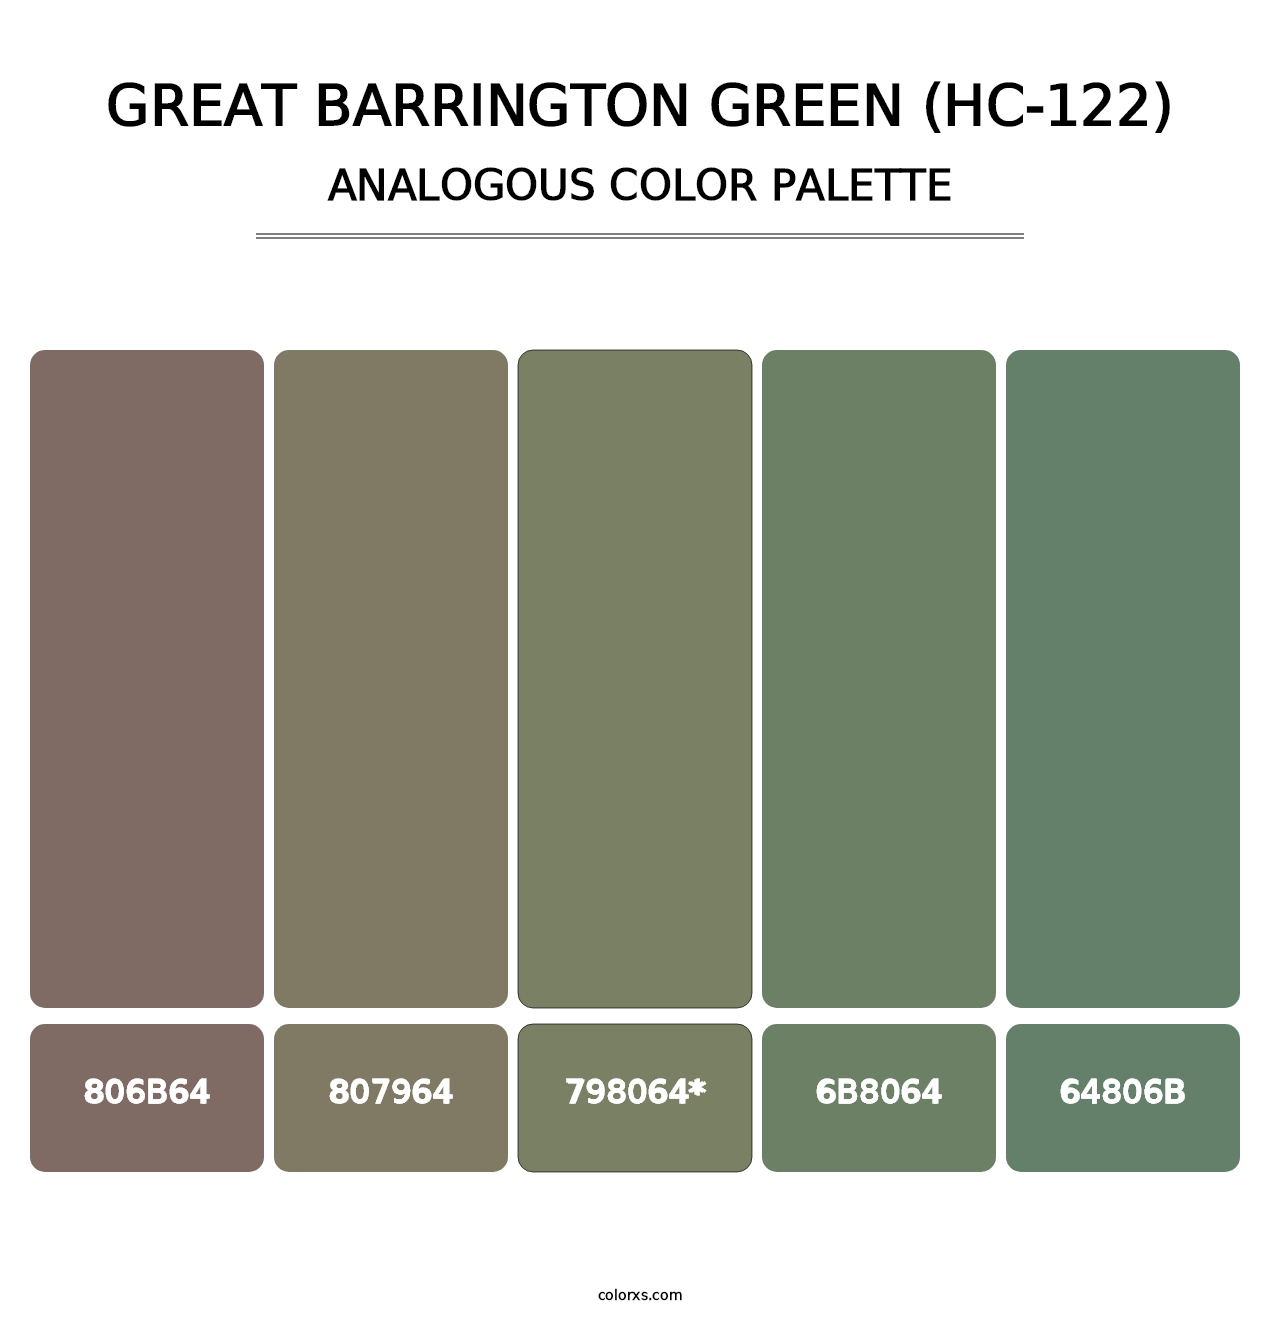 Great Barrington Green (HC-122) - Analogous Color Palette